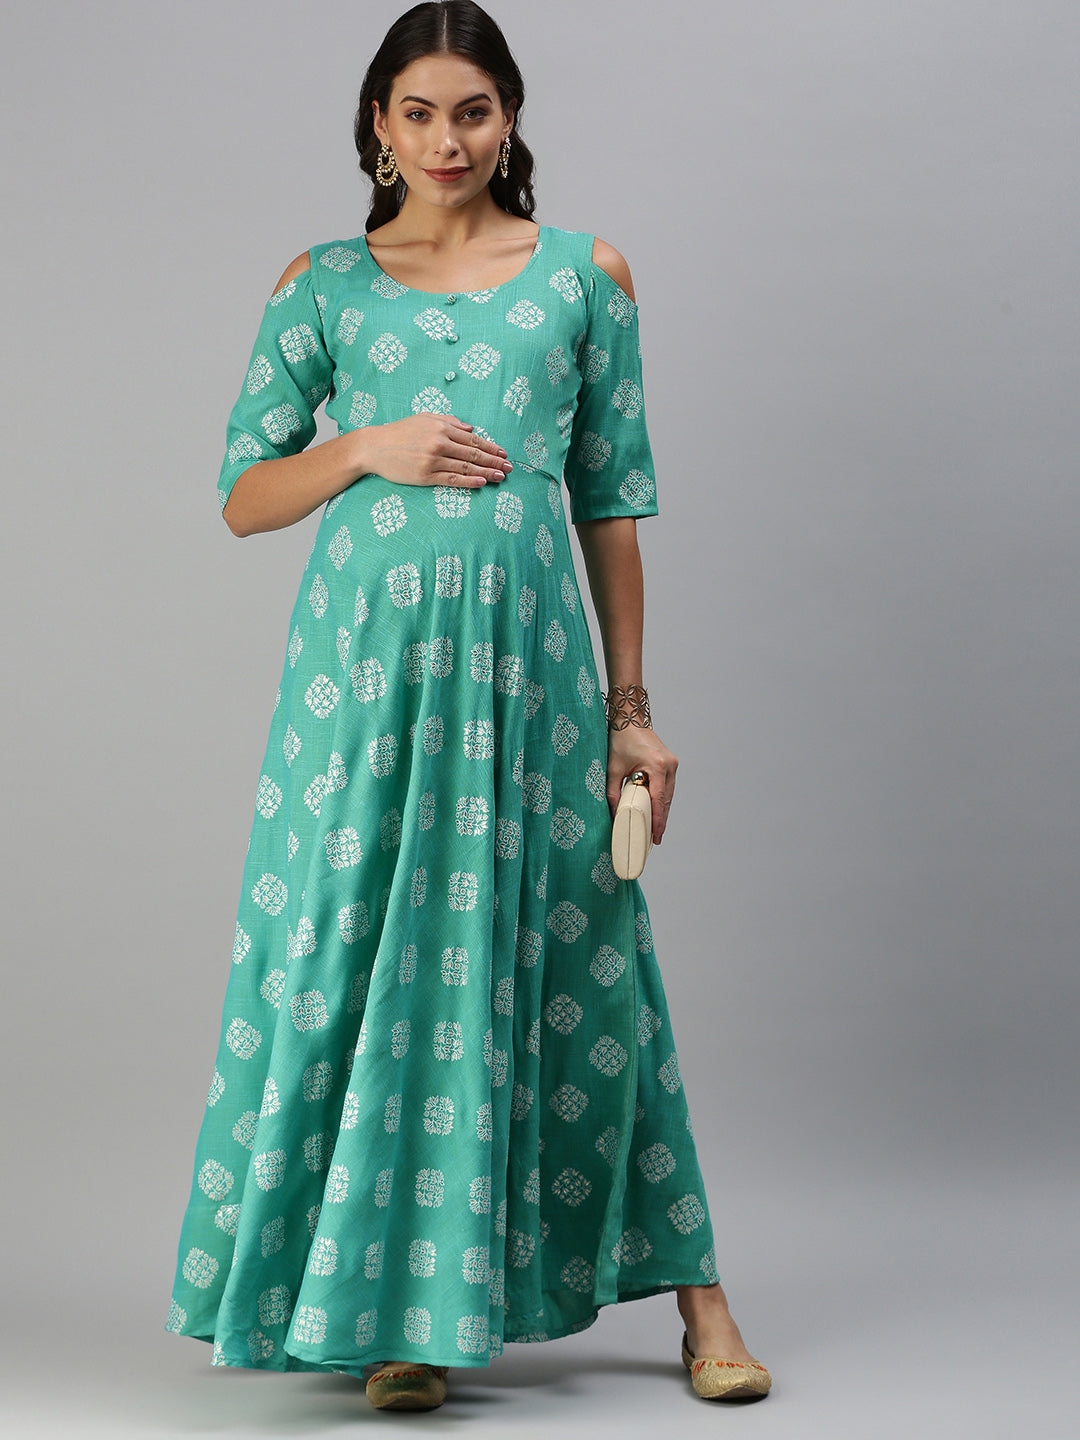 Sea Green & White Ethnic Motifs Printed Maternity Maxi Dress